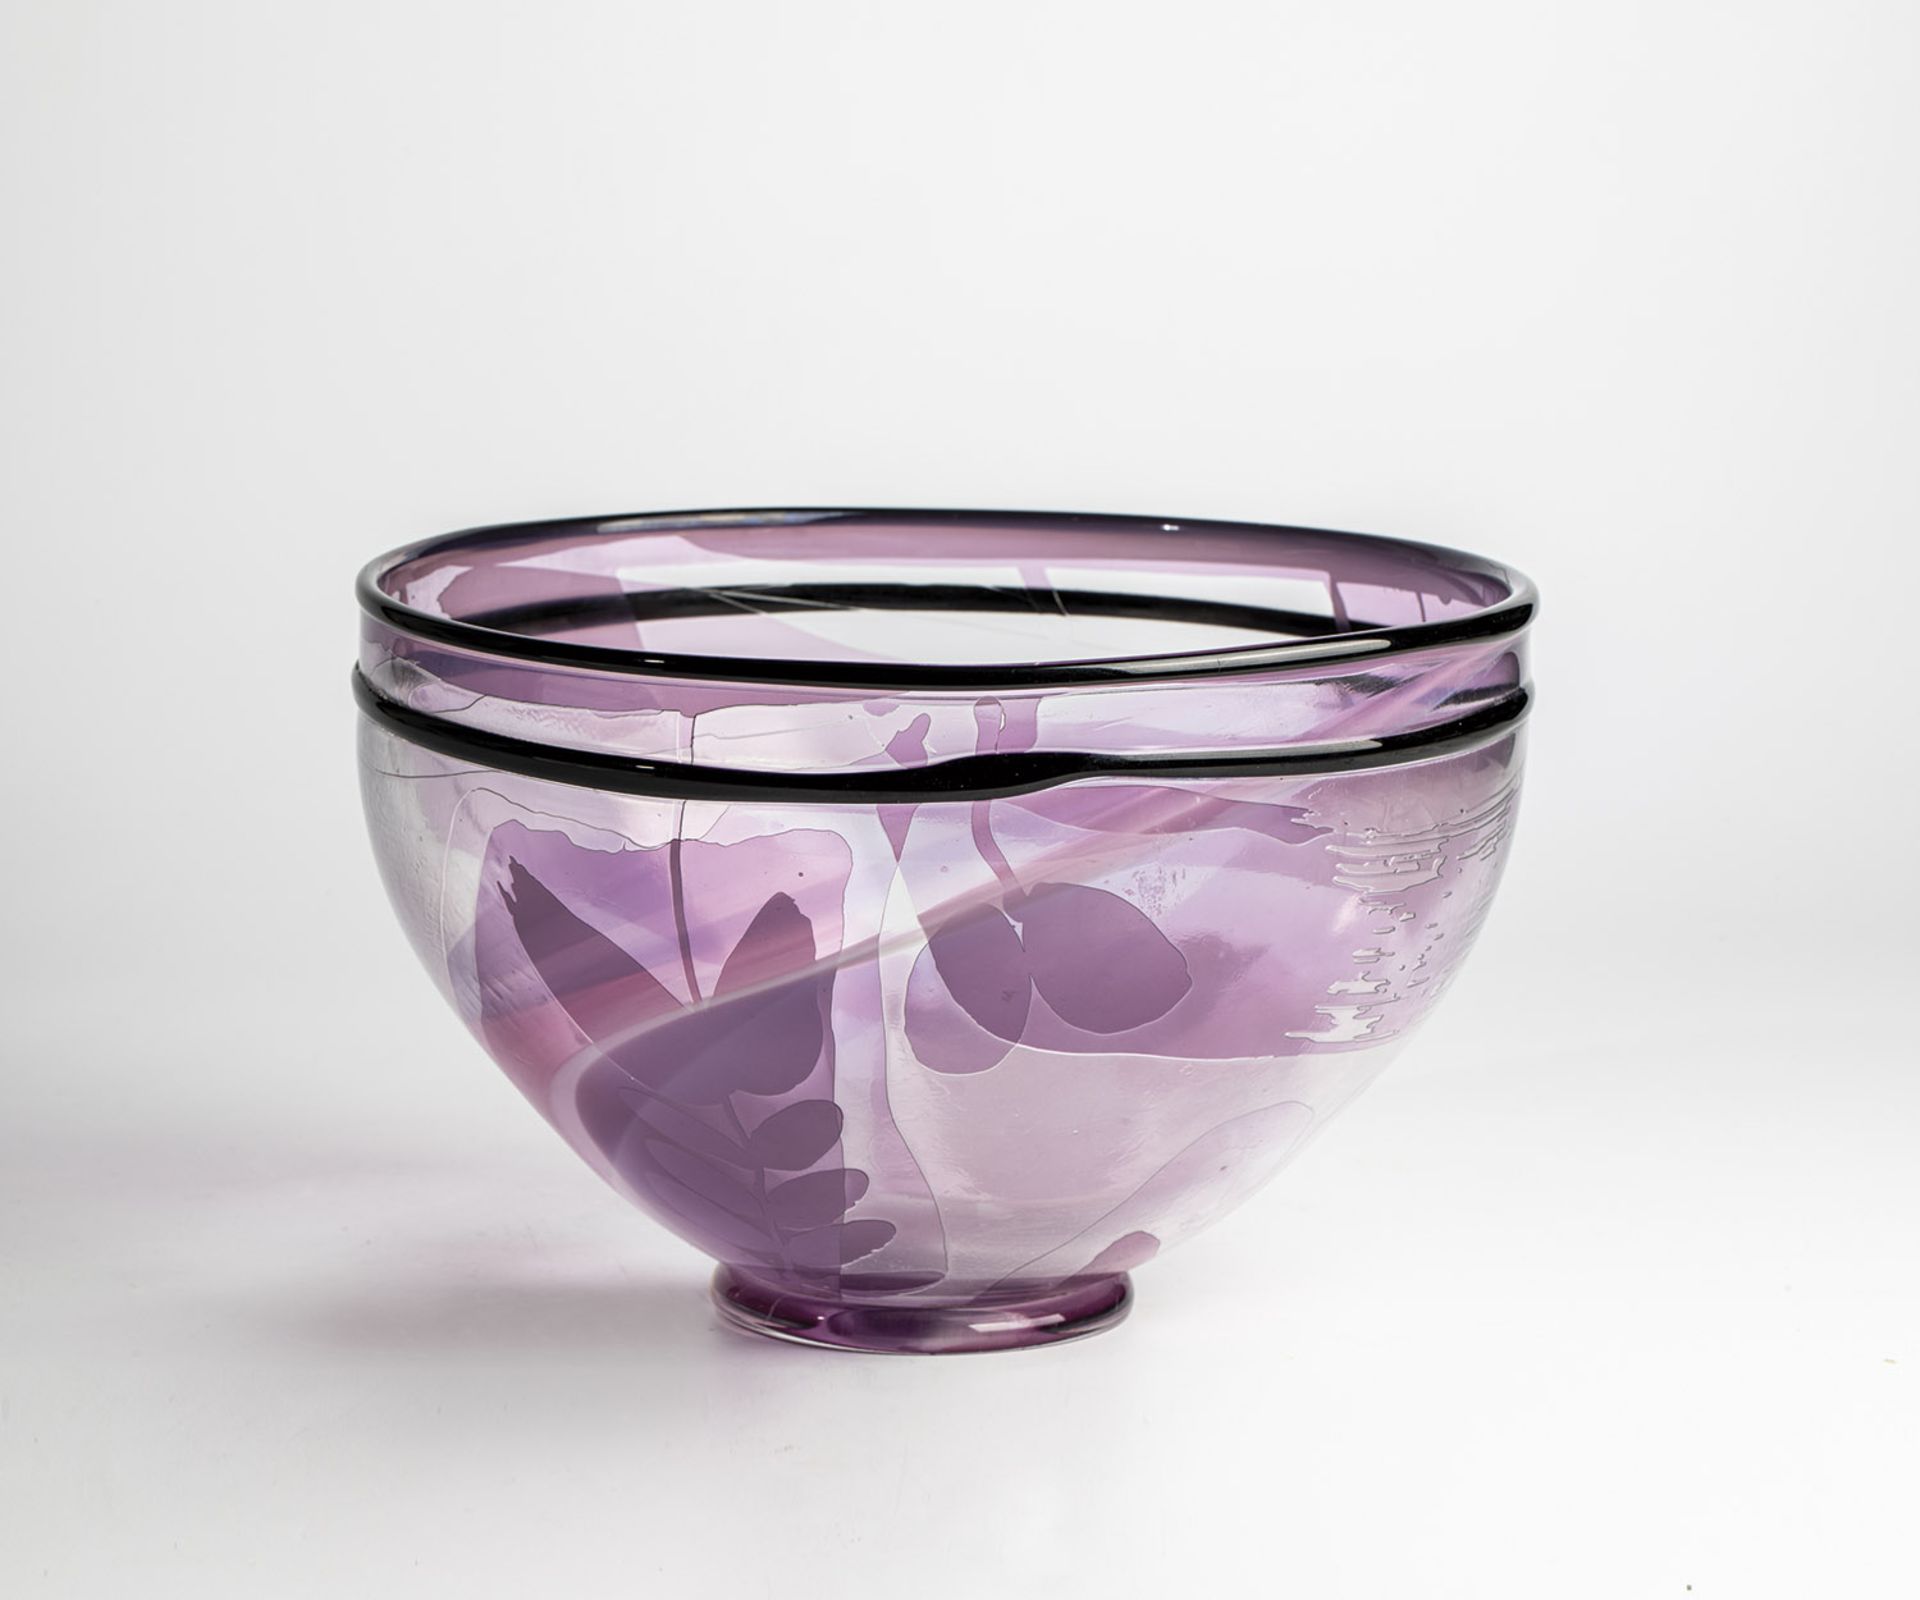 Bowl Ann Wolff (Ann Waerff) for Kosta, 1975 Colourless glass, violet and white opal underlay,